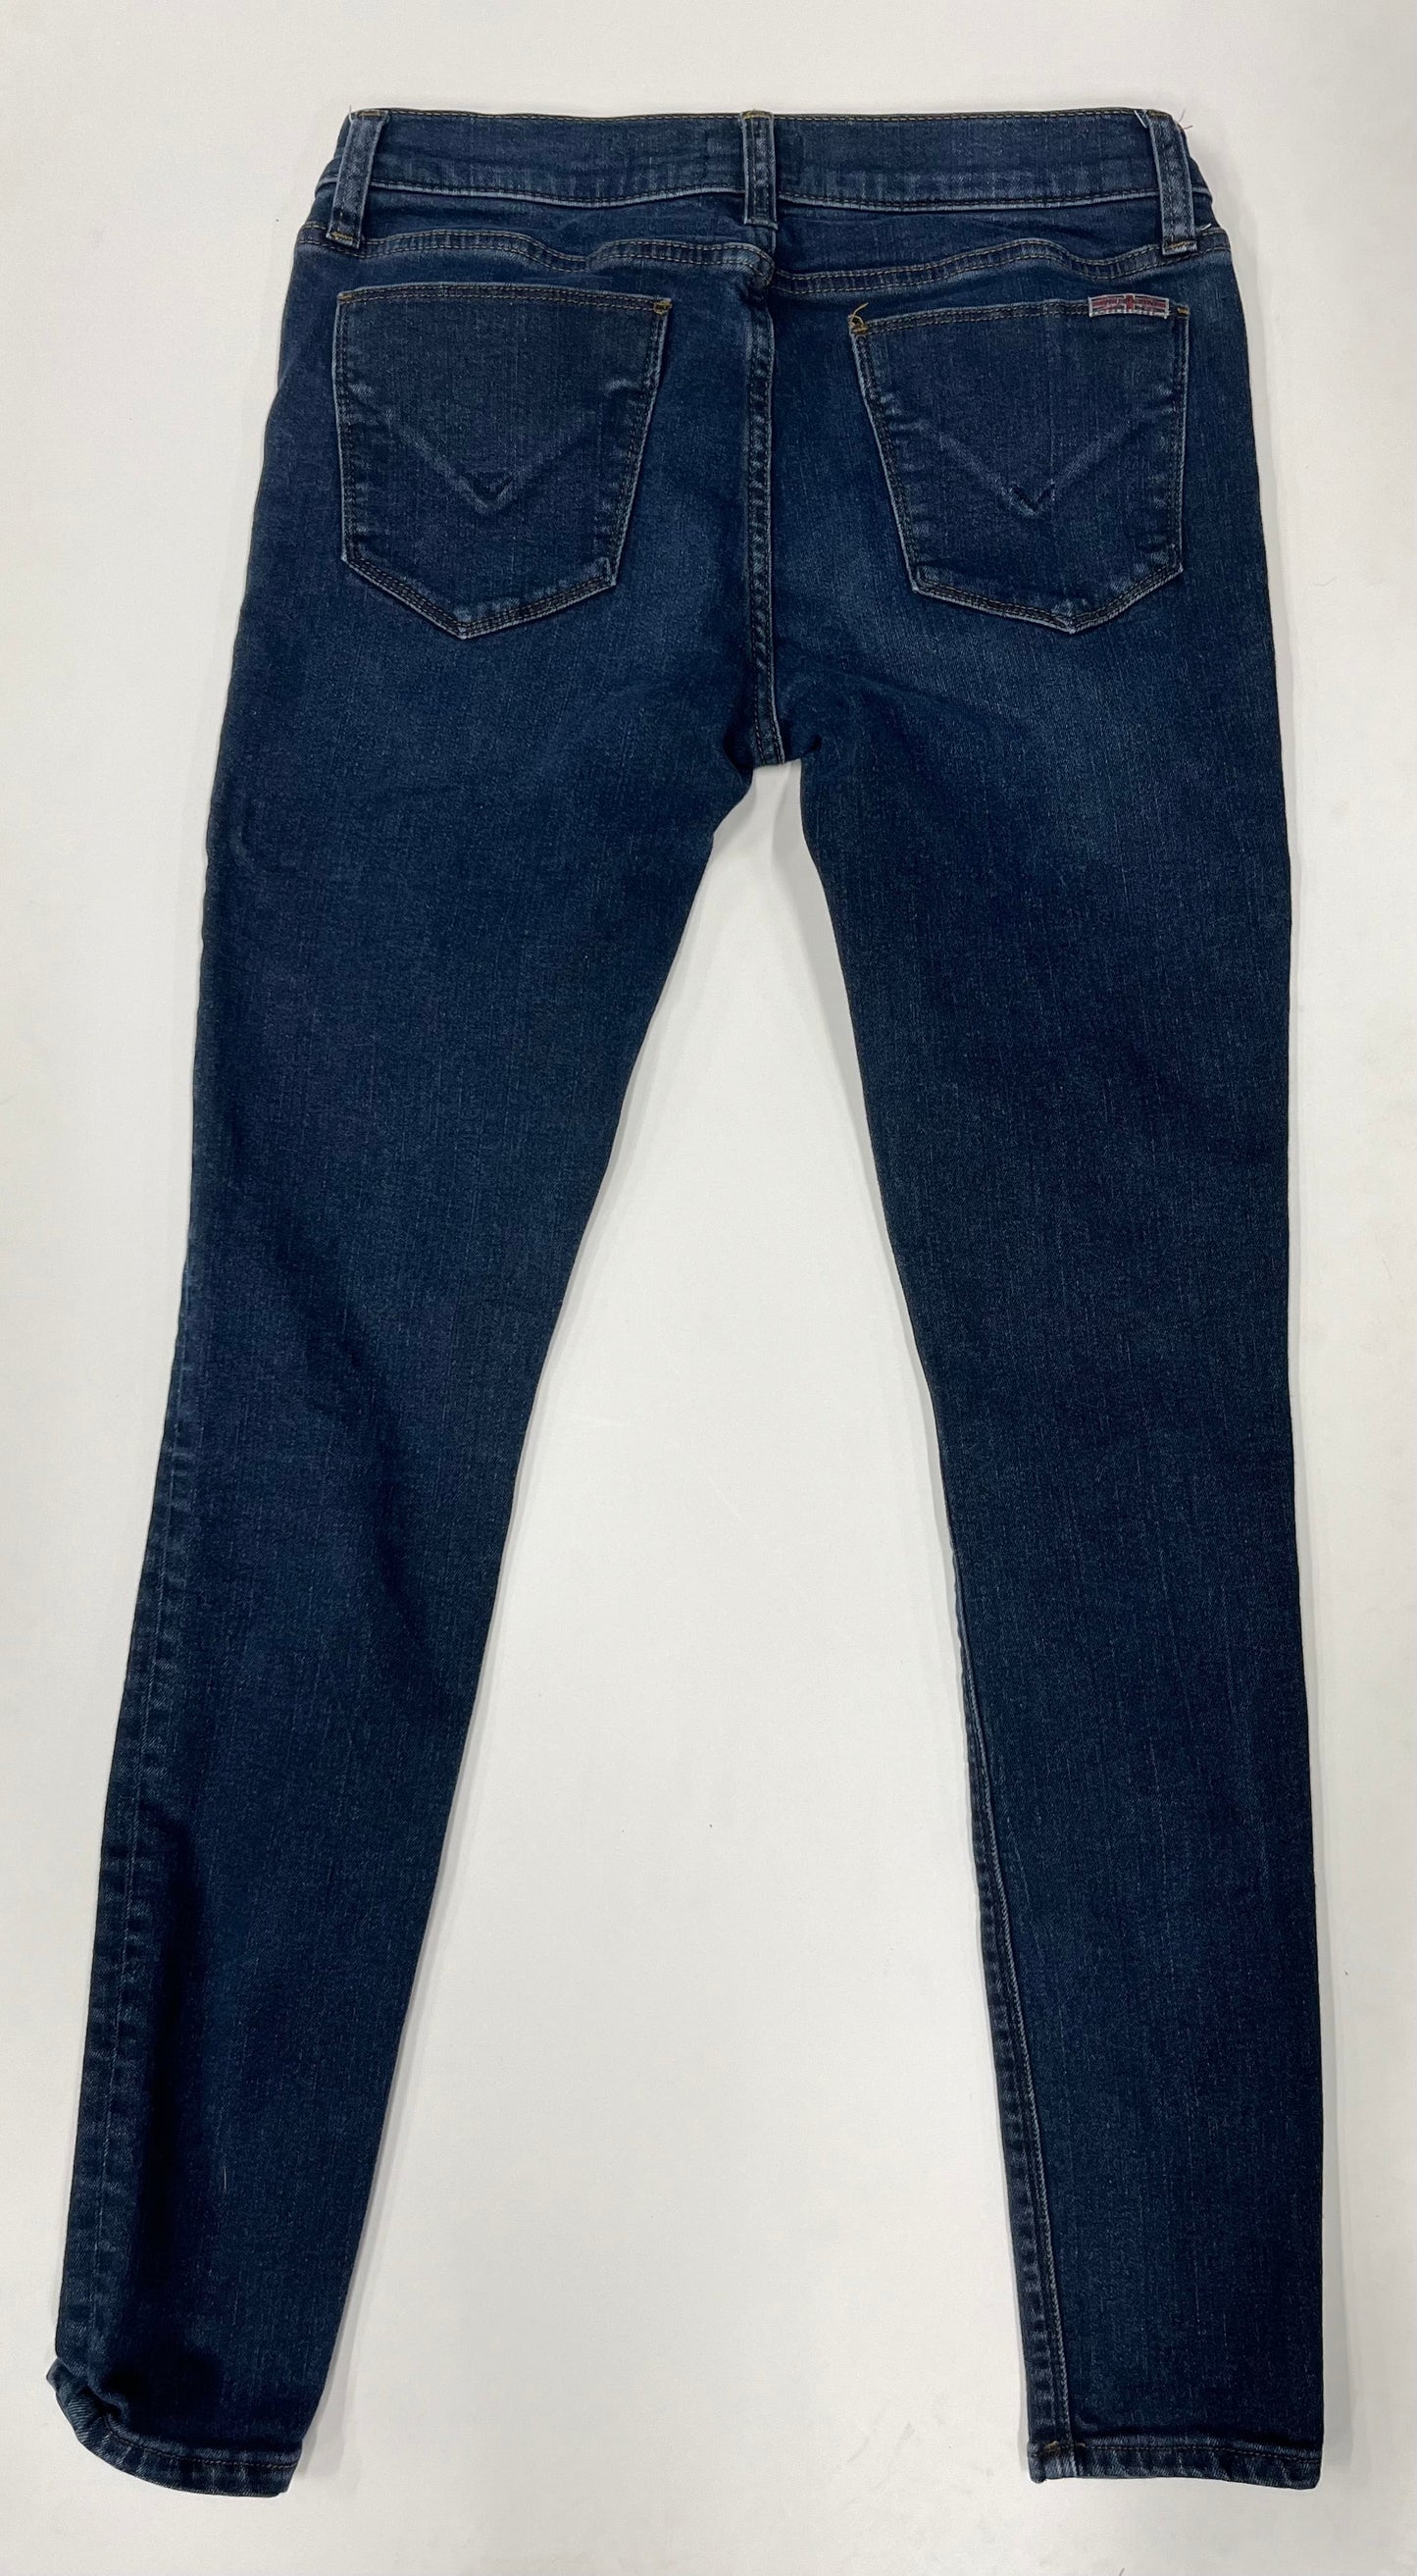 Jeans By Hudson  Size: 4